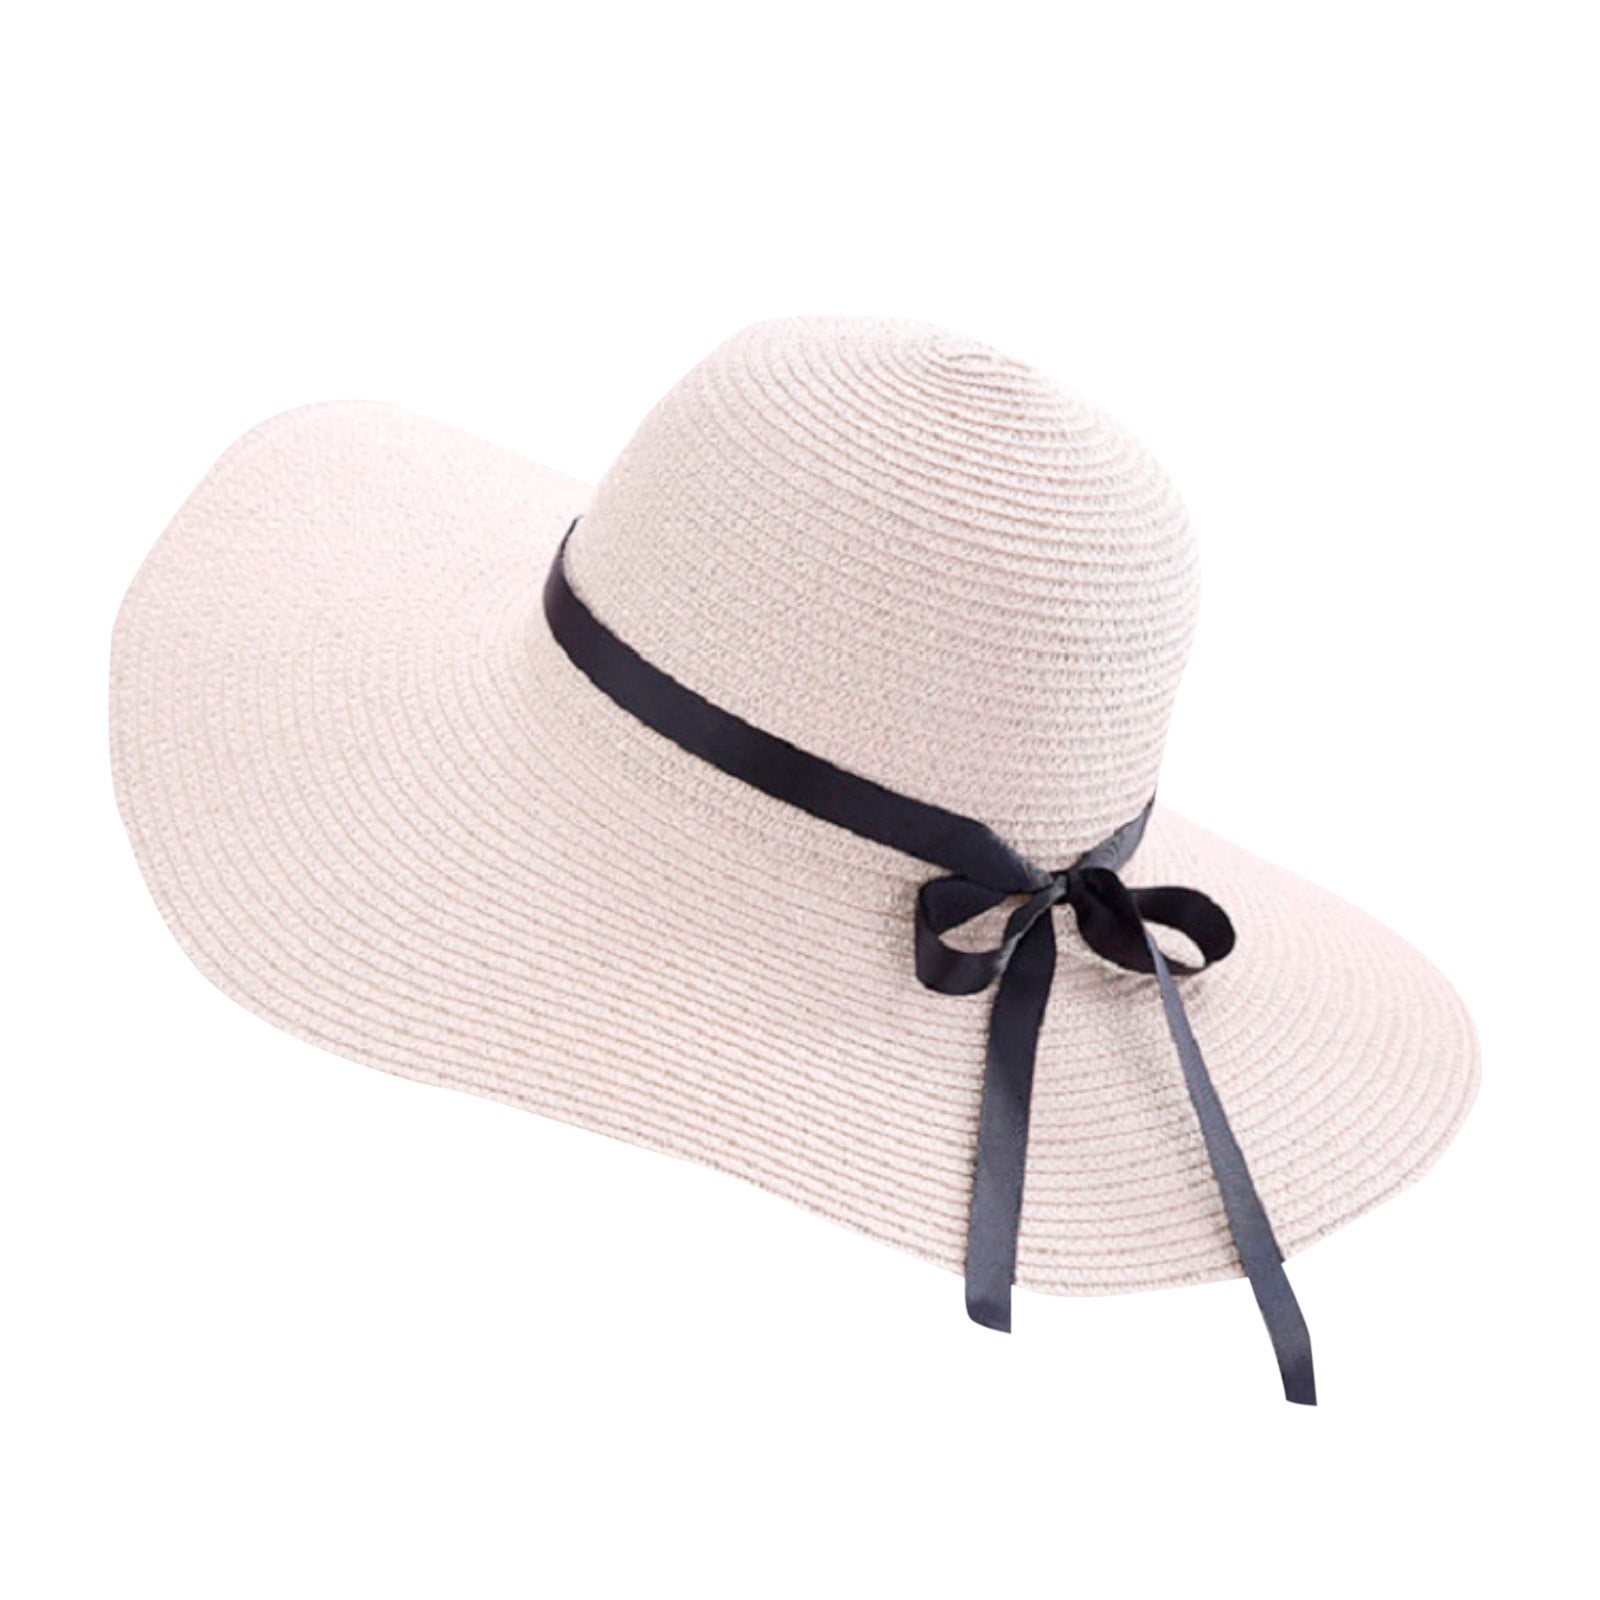 2DXuixsh Wide Brimmed Hats for Men Women Big Brim Straw Hat Sun